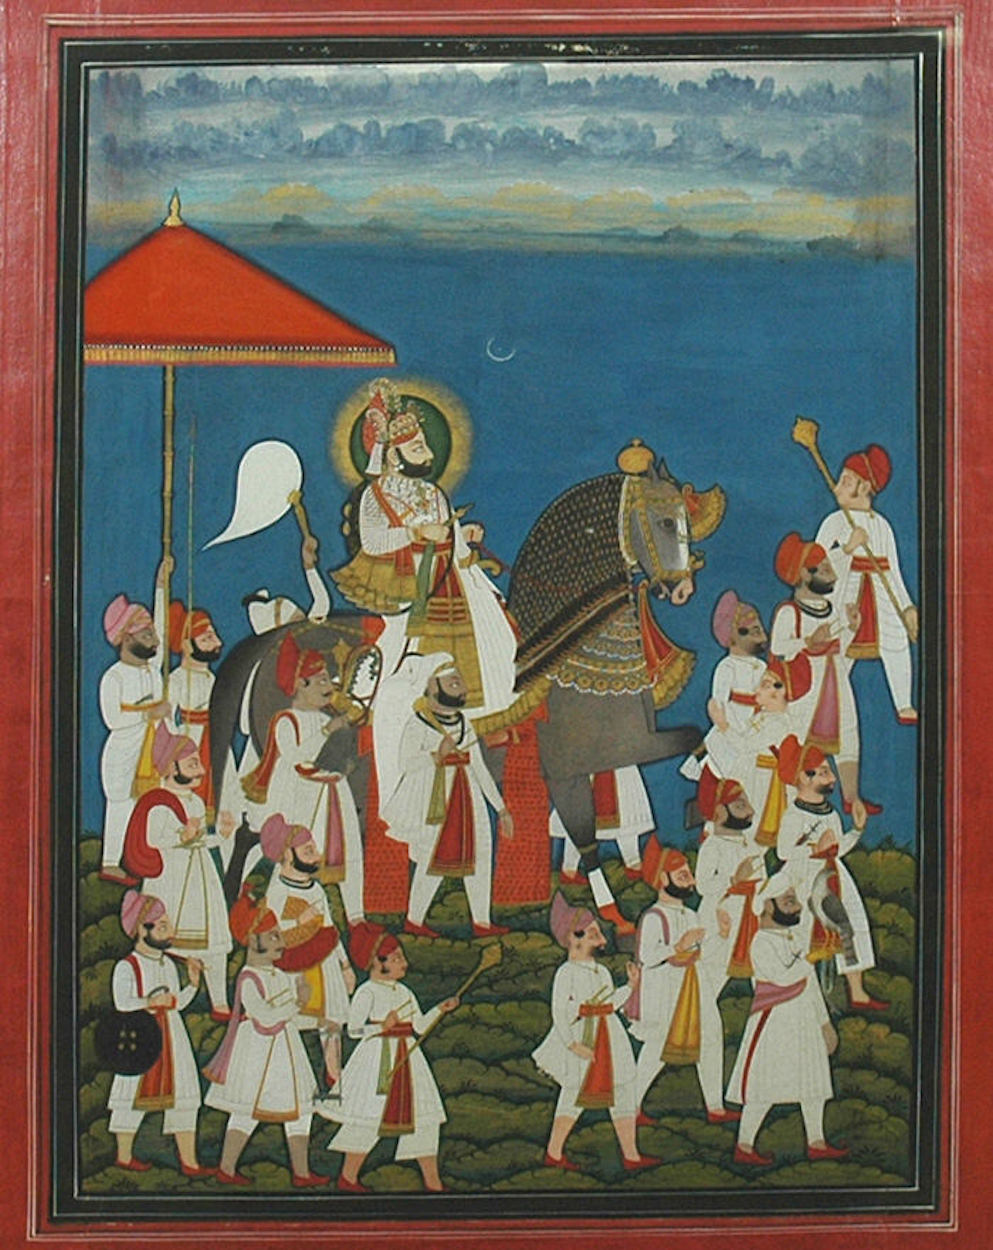 Ghasi (attributed) - 19th century